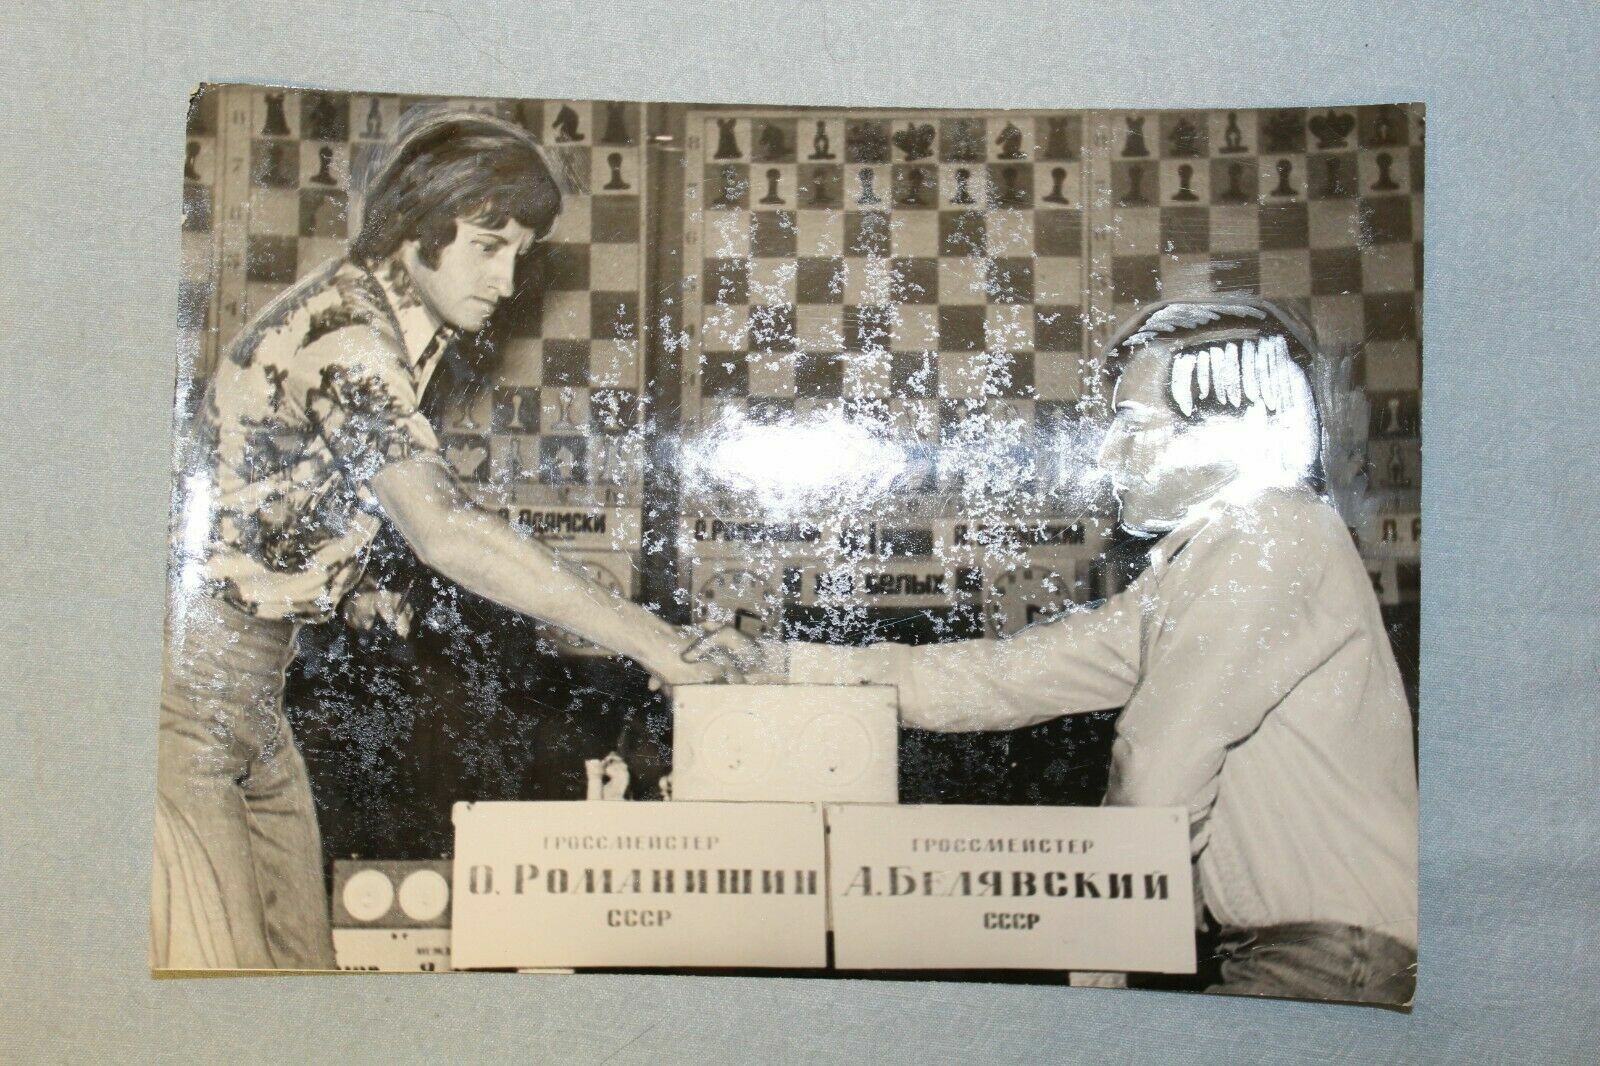 11781.Soviet Chess Photo: O. Romanishin  A. Belyavsky. Made by Naumenko